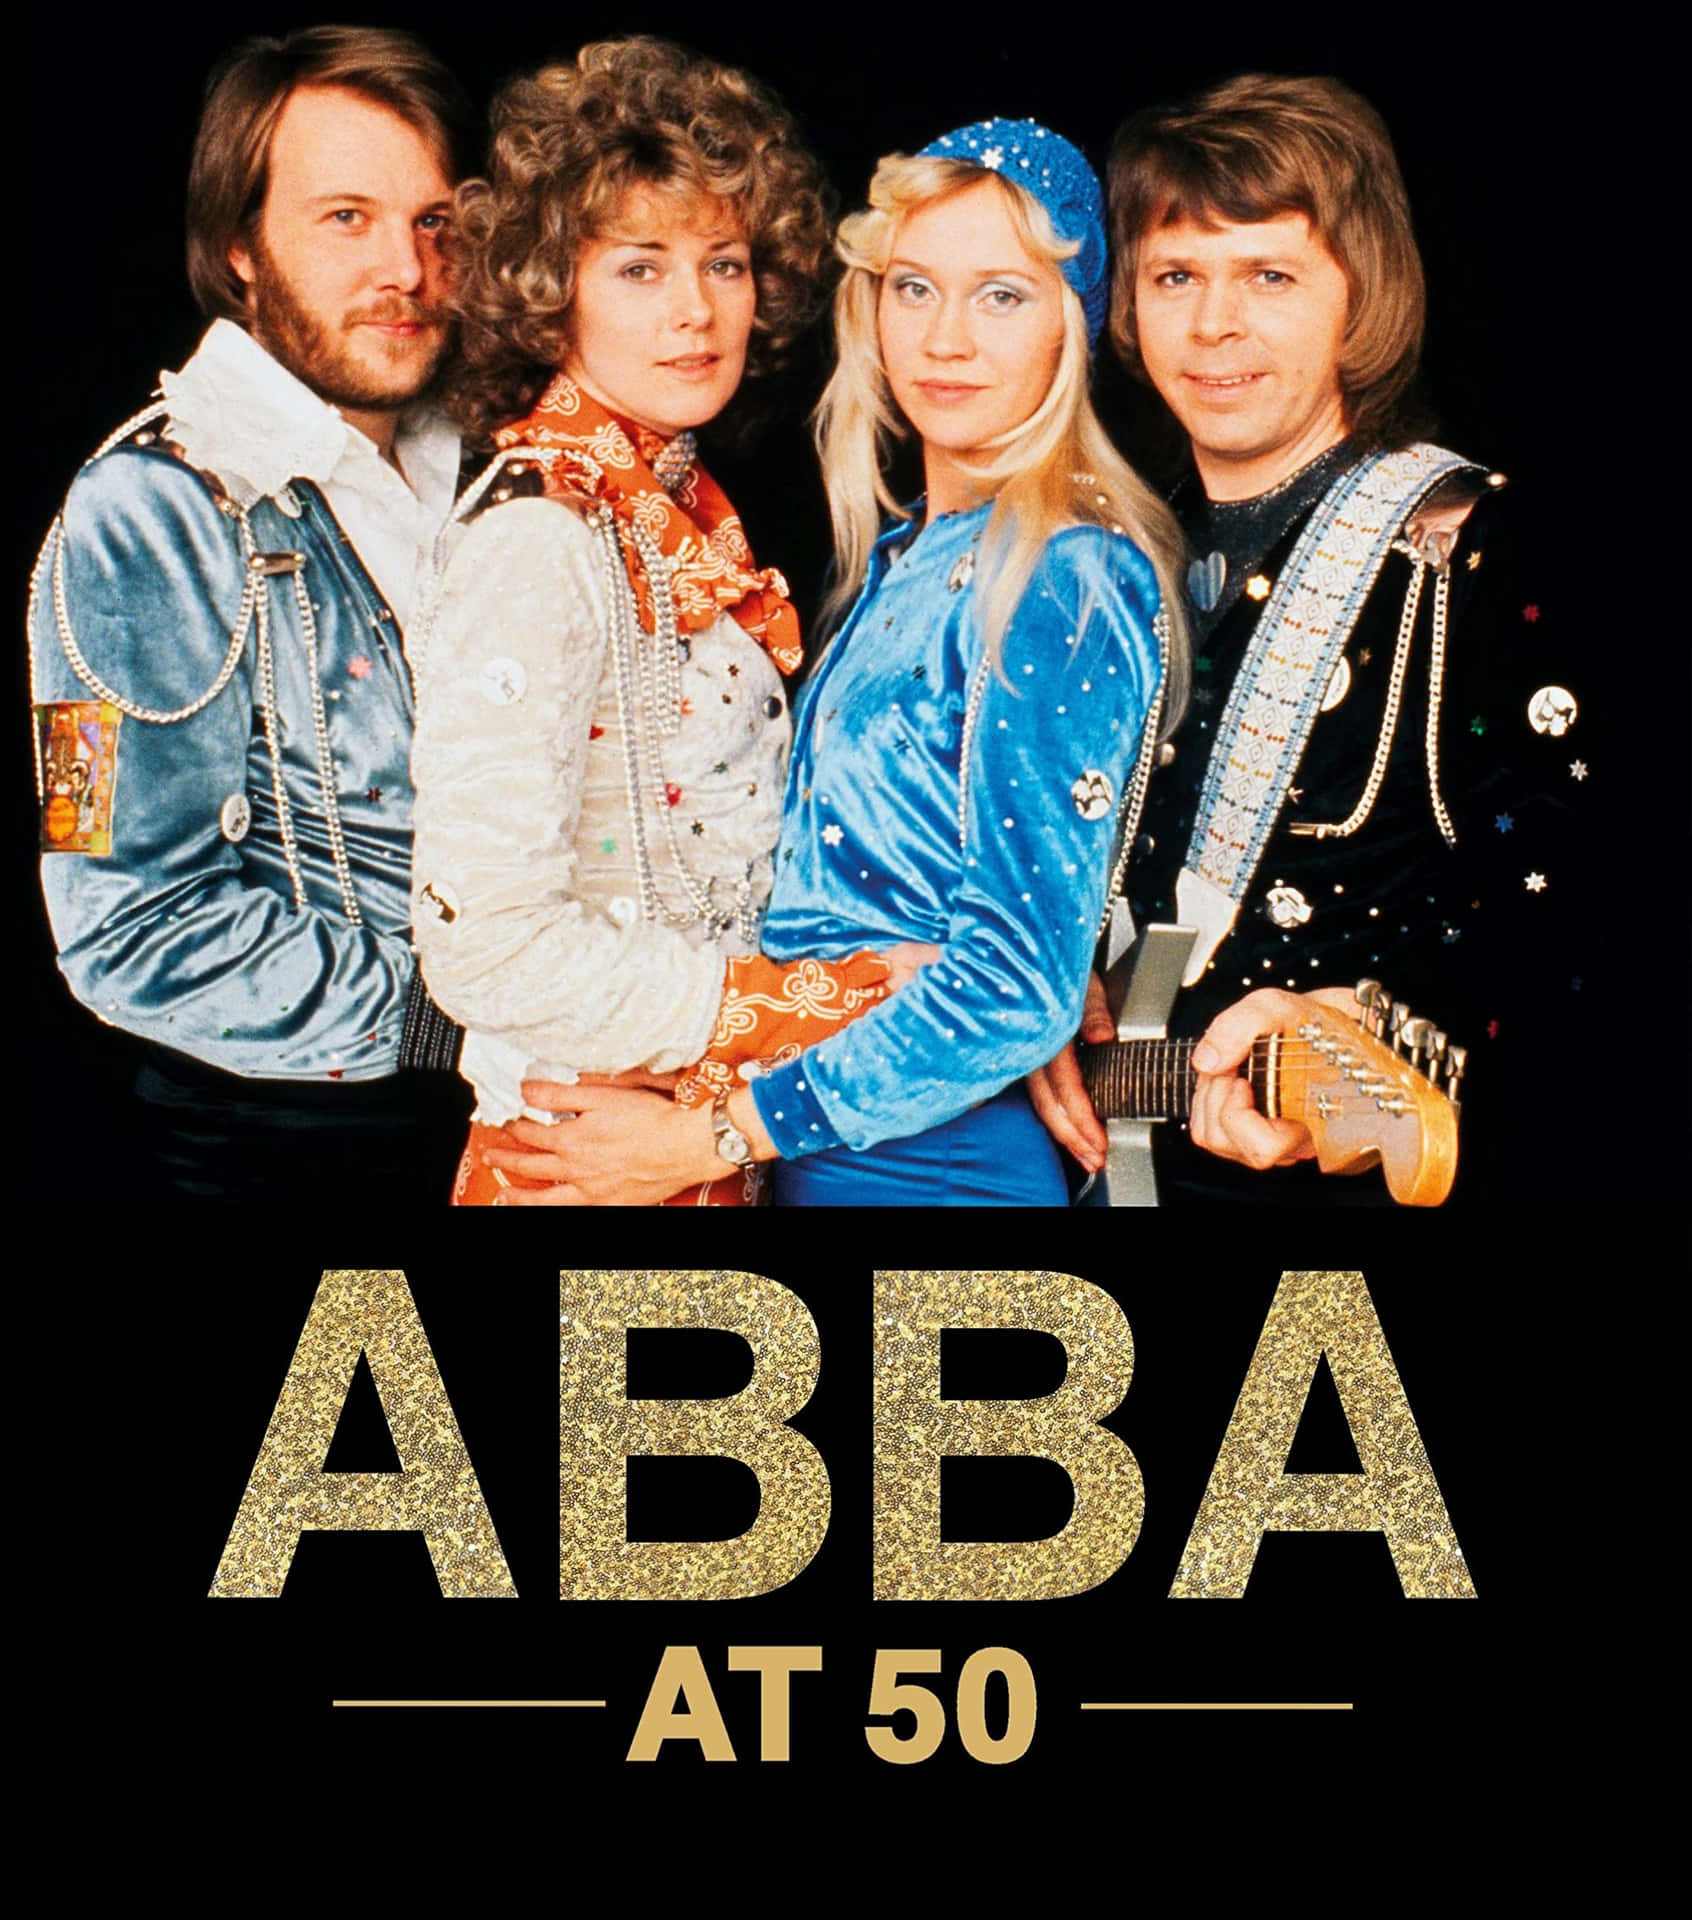 Swedish Pop Superstars ABBA